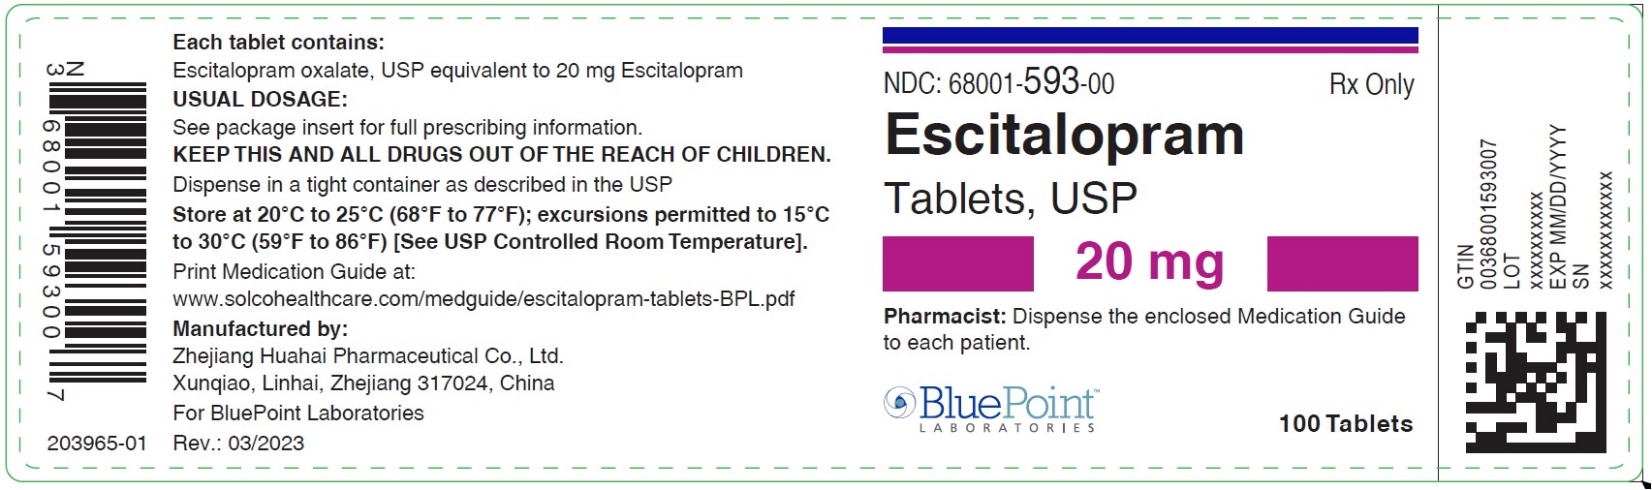 Bottle Label Escitalopram Tablets 20 mg 100 count